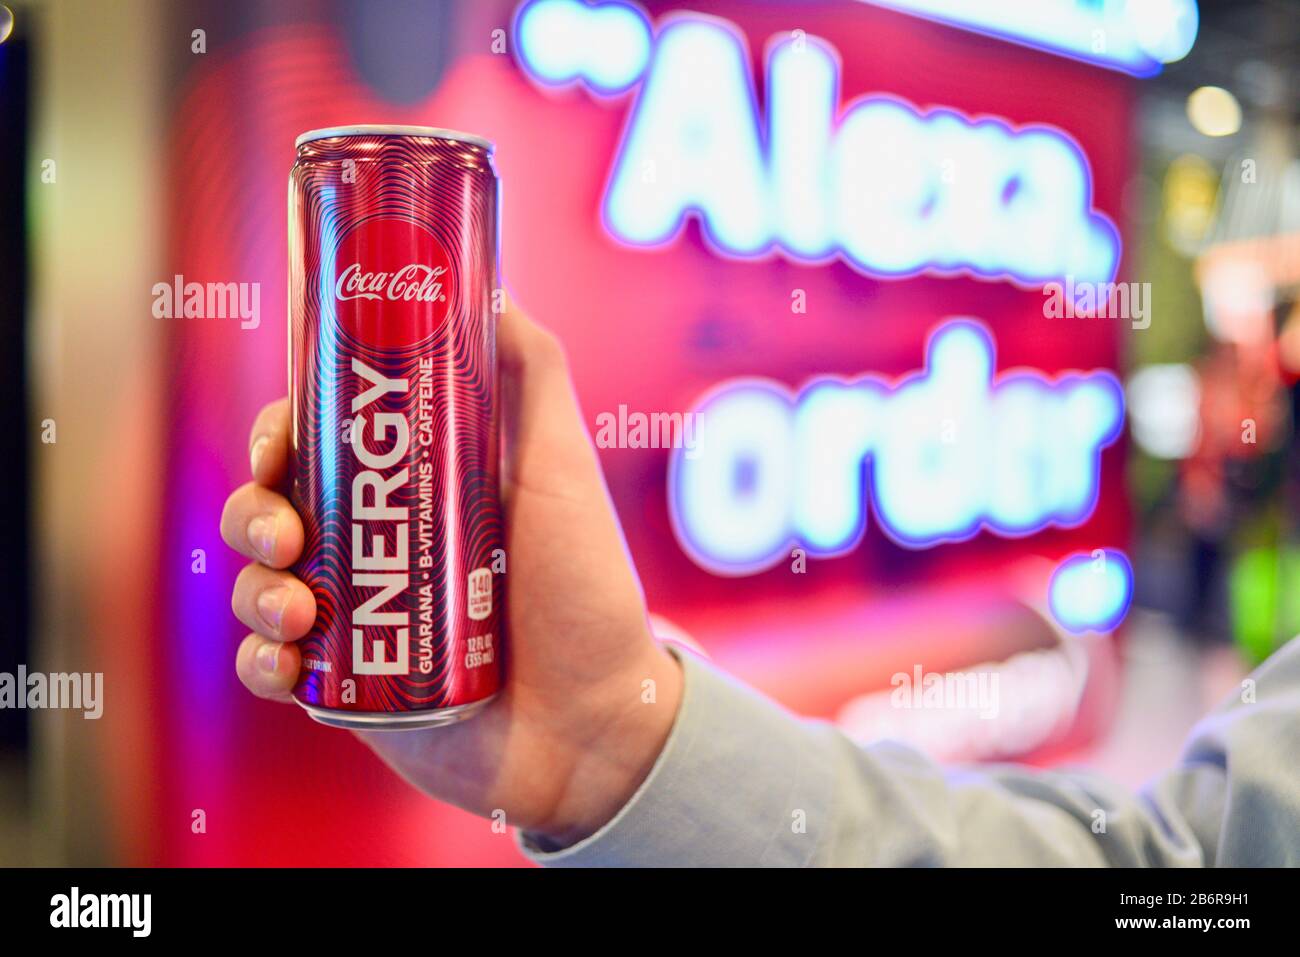 Coca cola energie -Fotos und -Bildmaterial in hoher Auflösung – Alamy